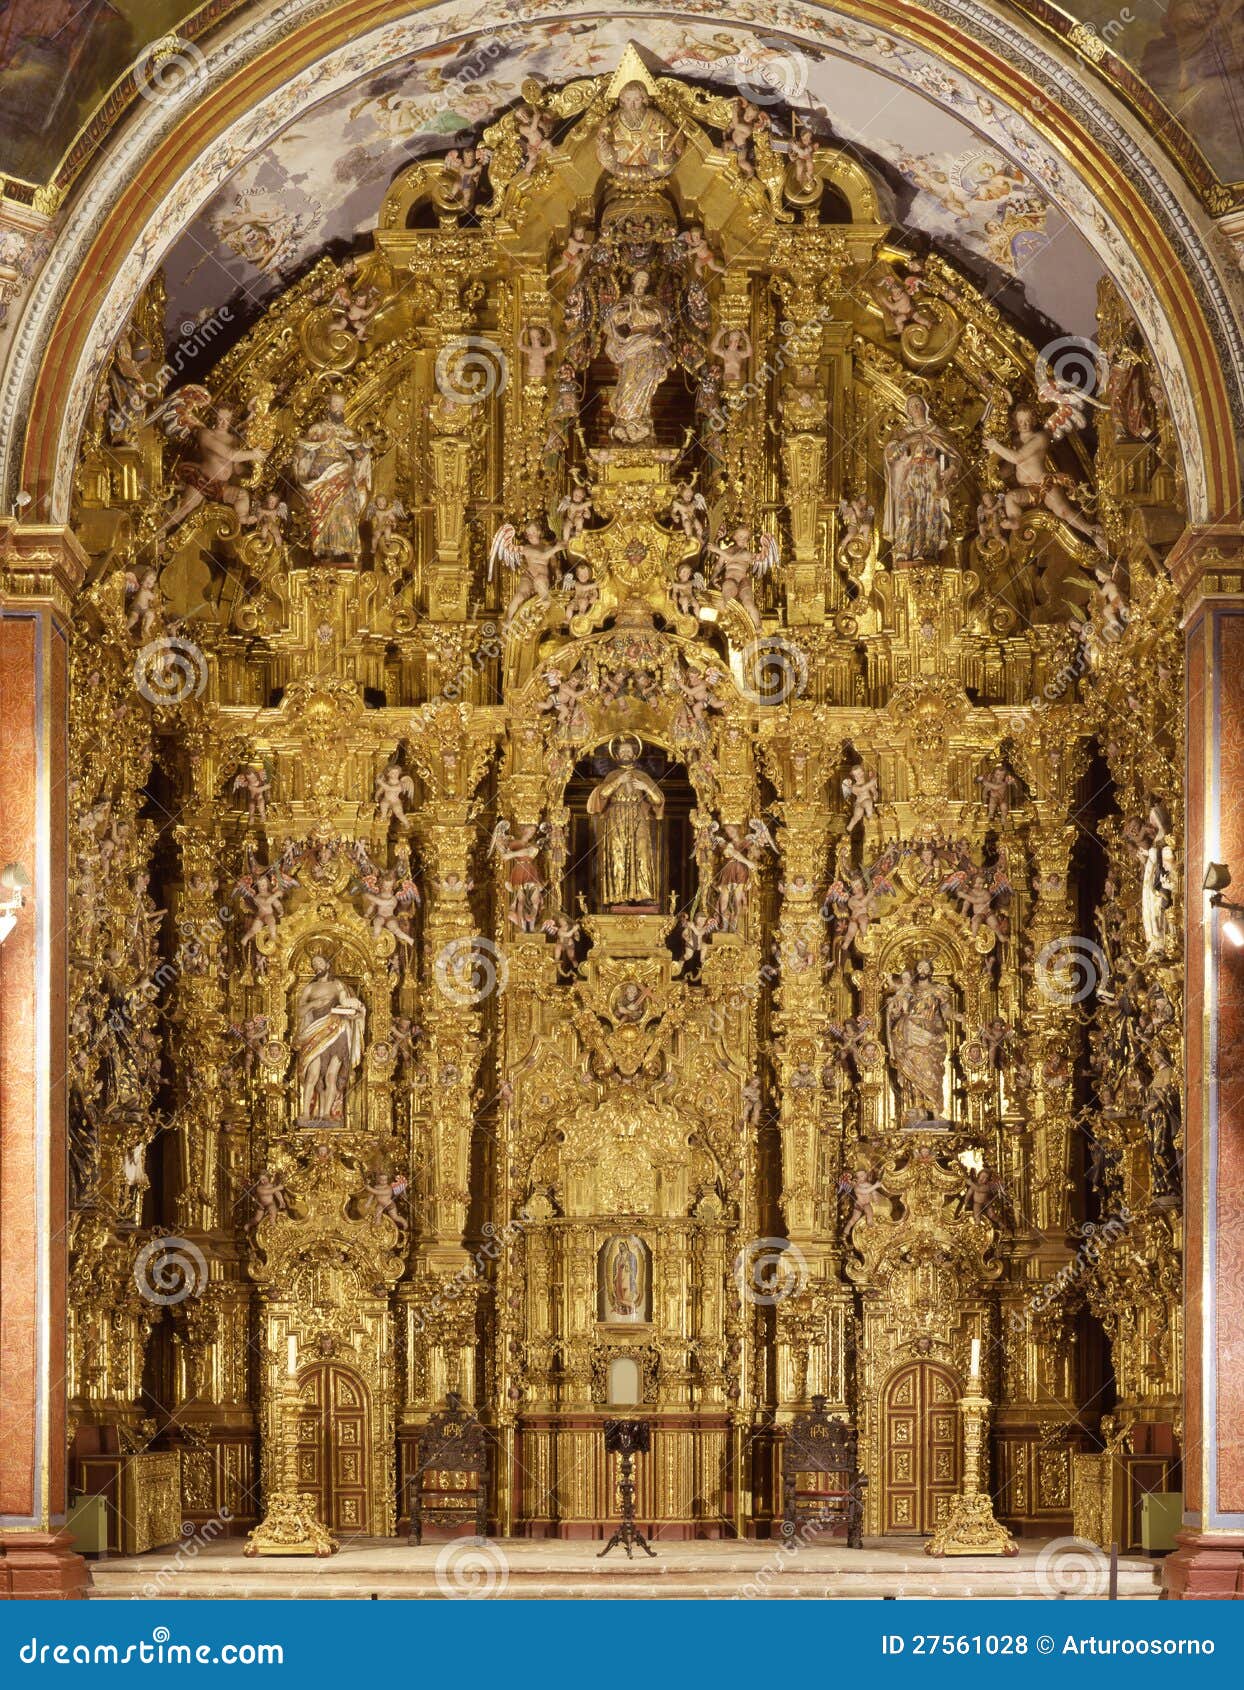 tepotzotlan altarpiece